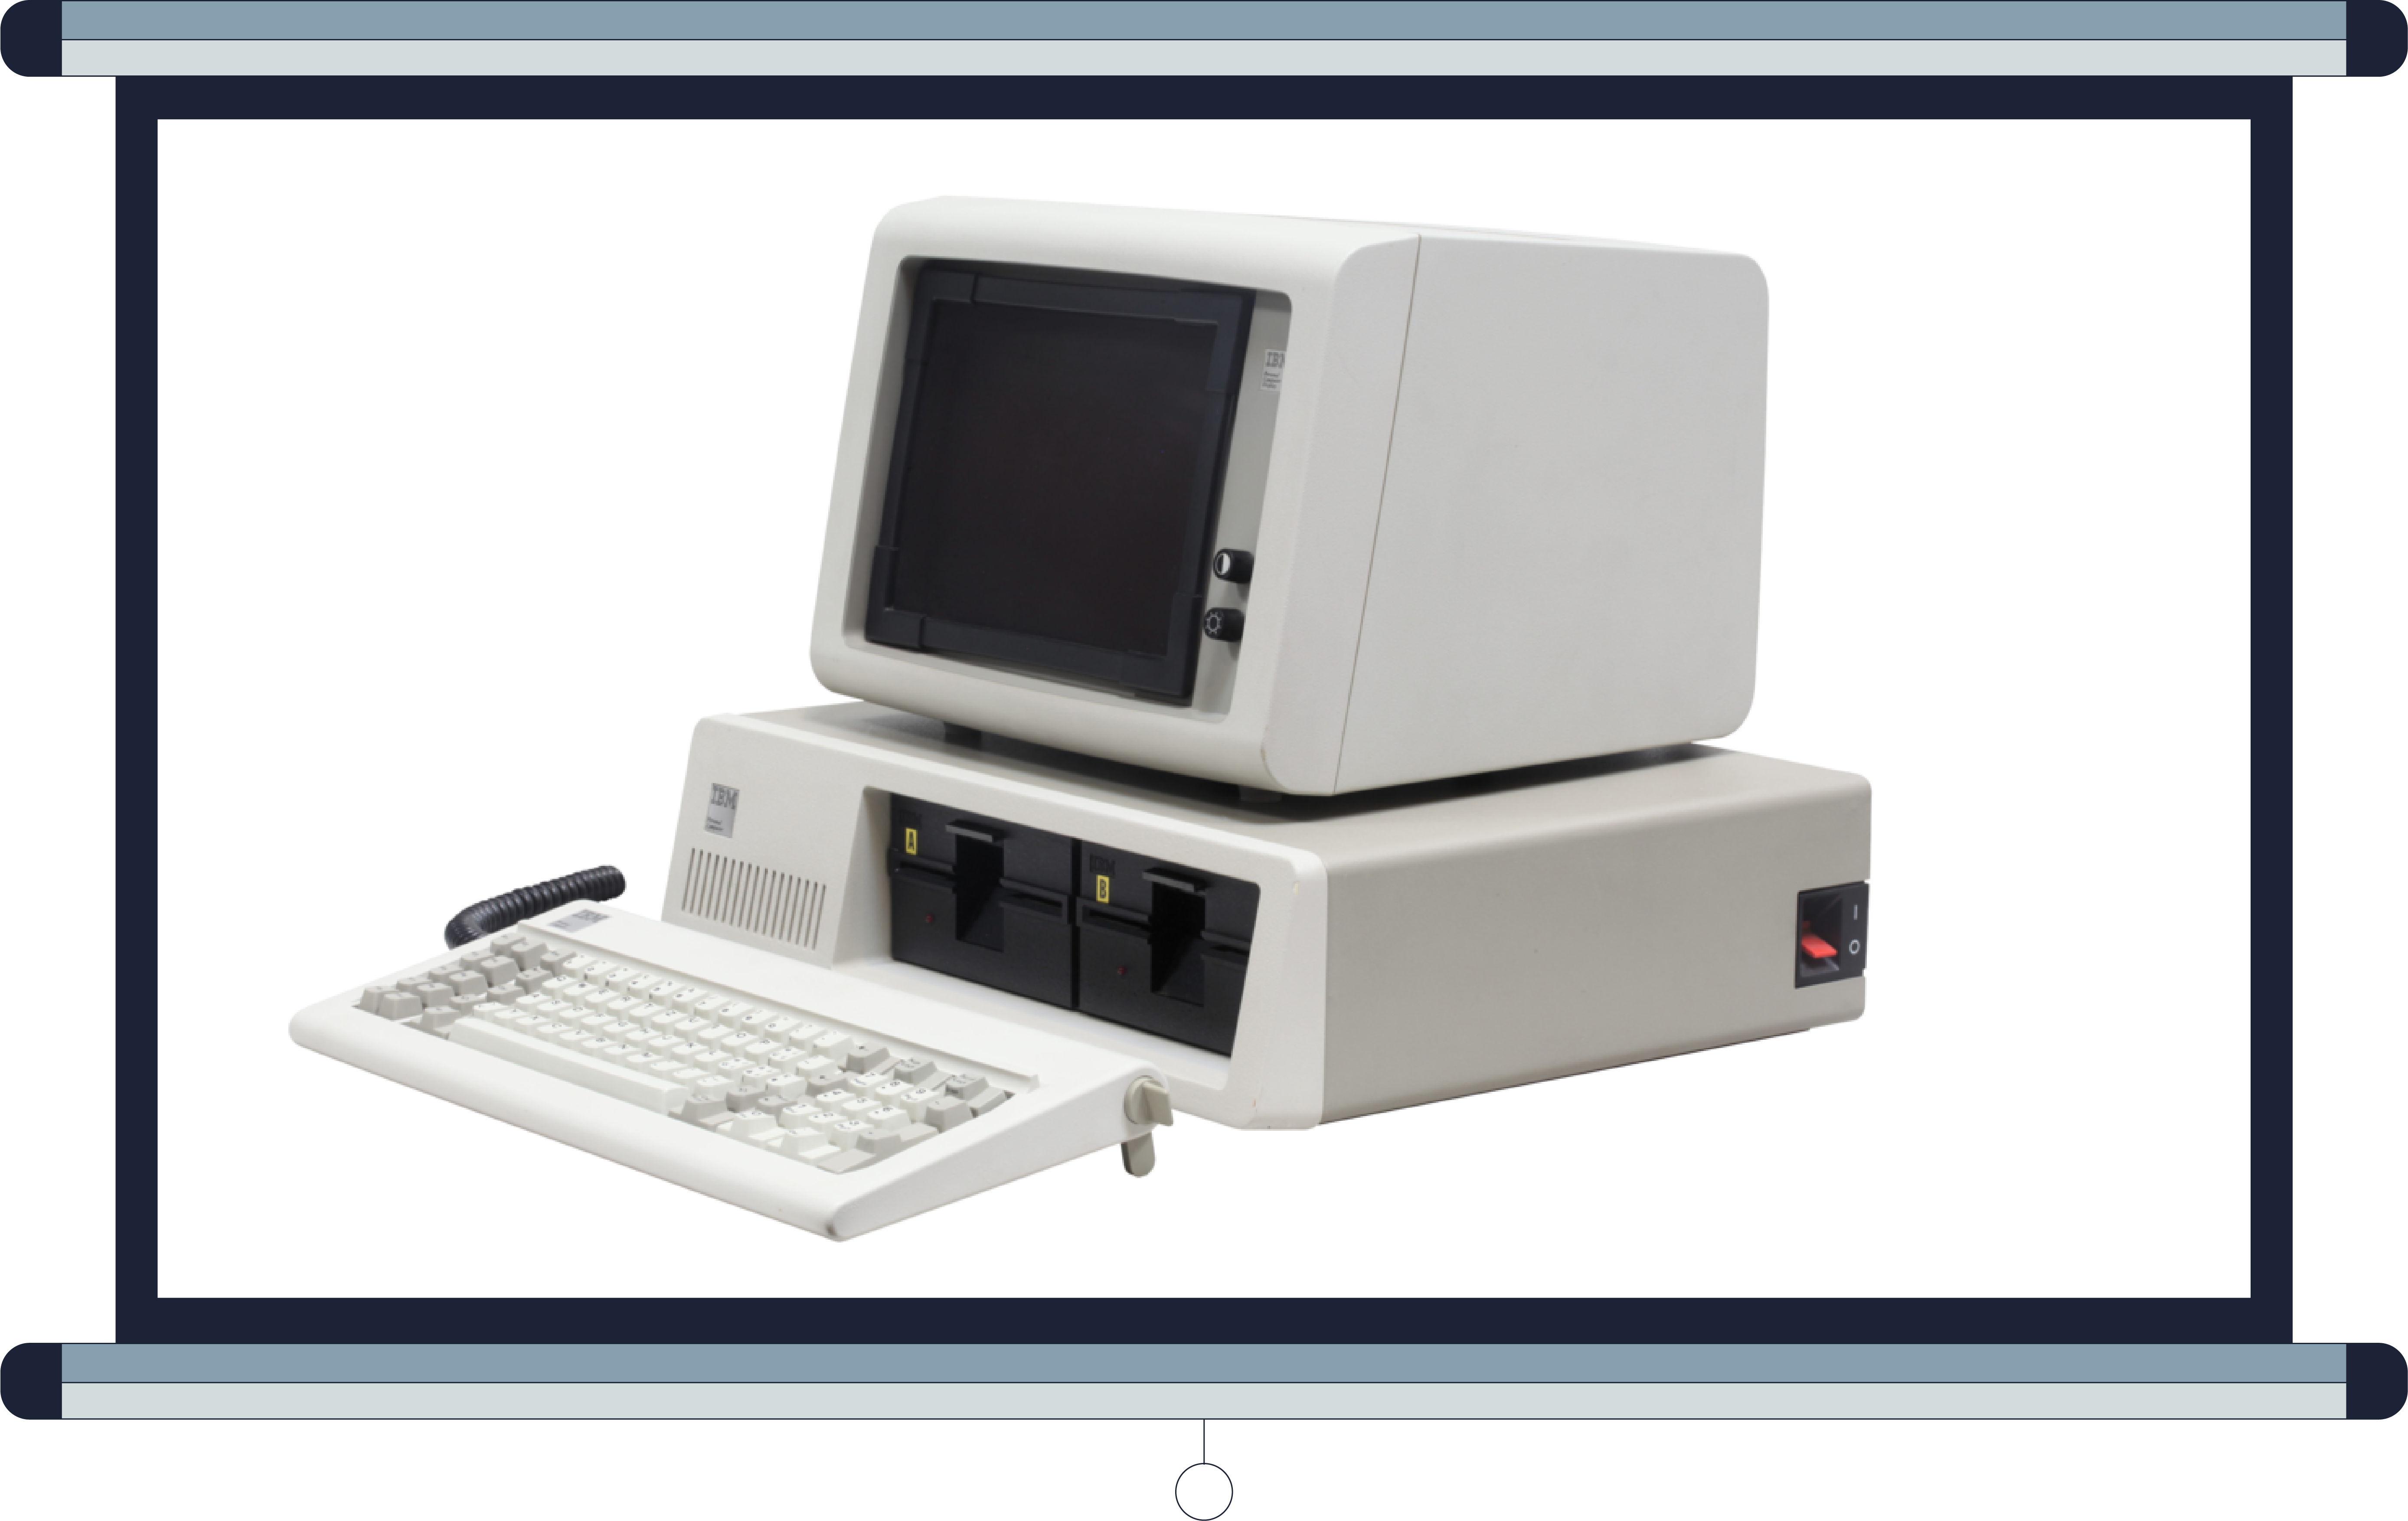 IBM PC 5150